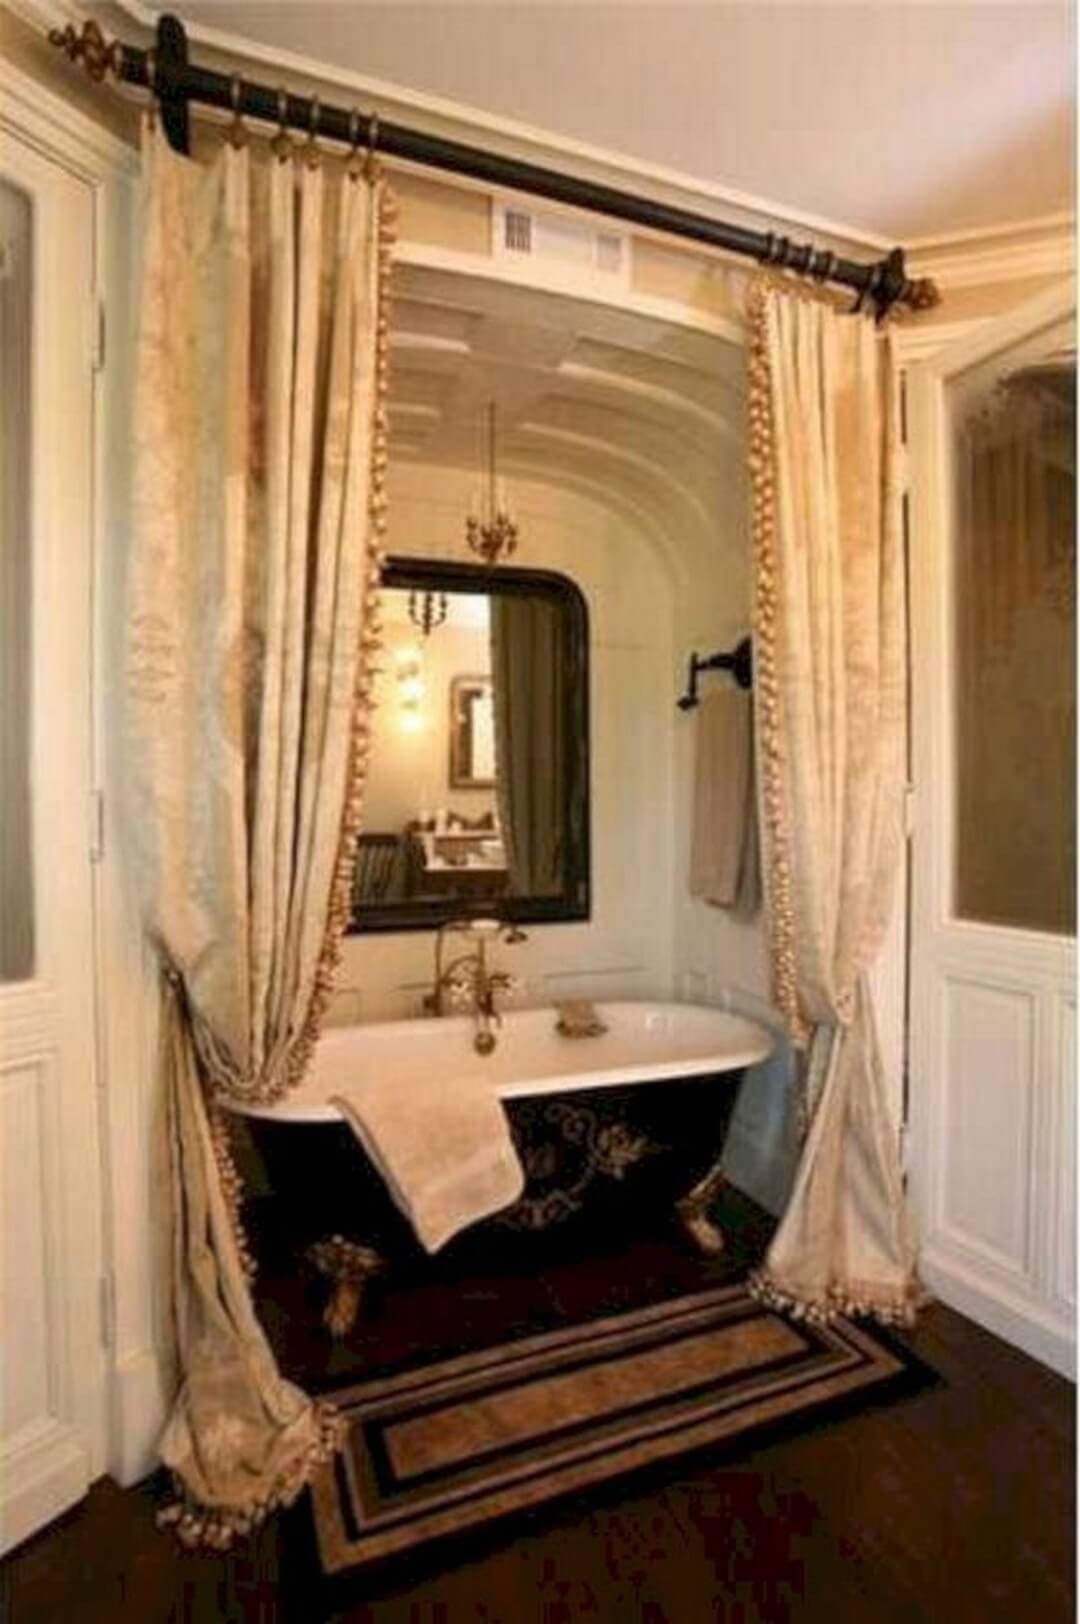 Vintage romantic bathroom